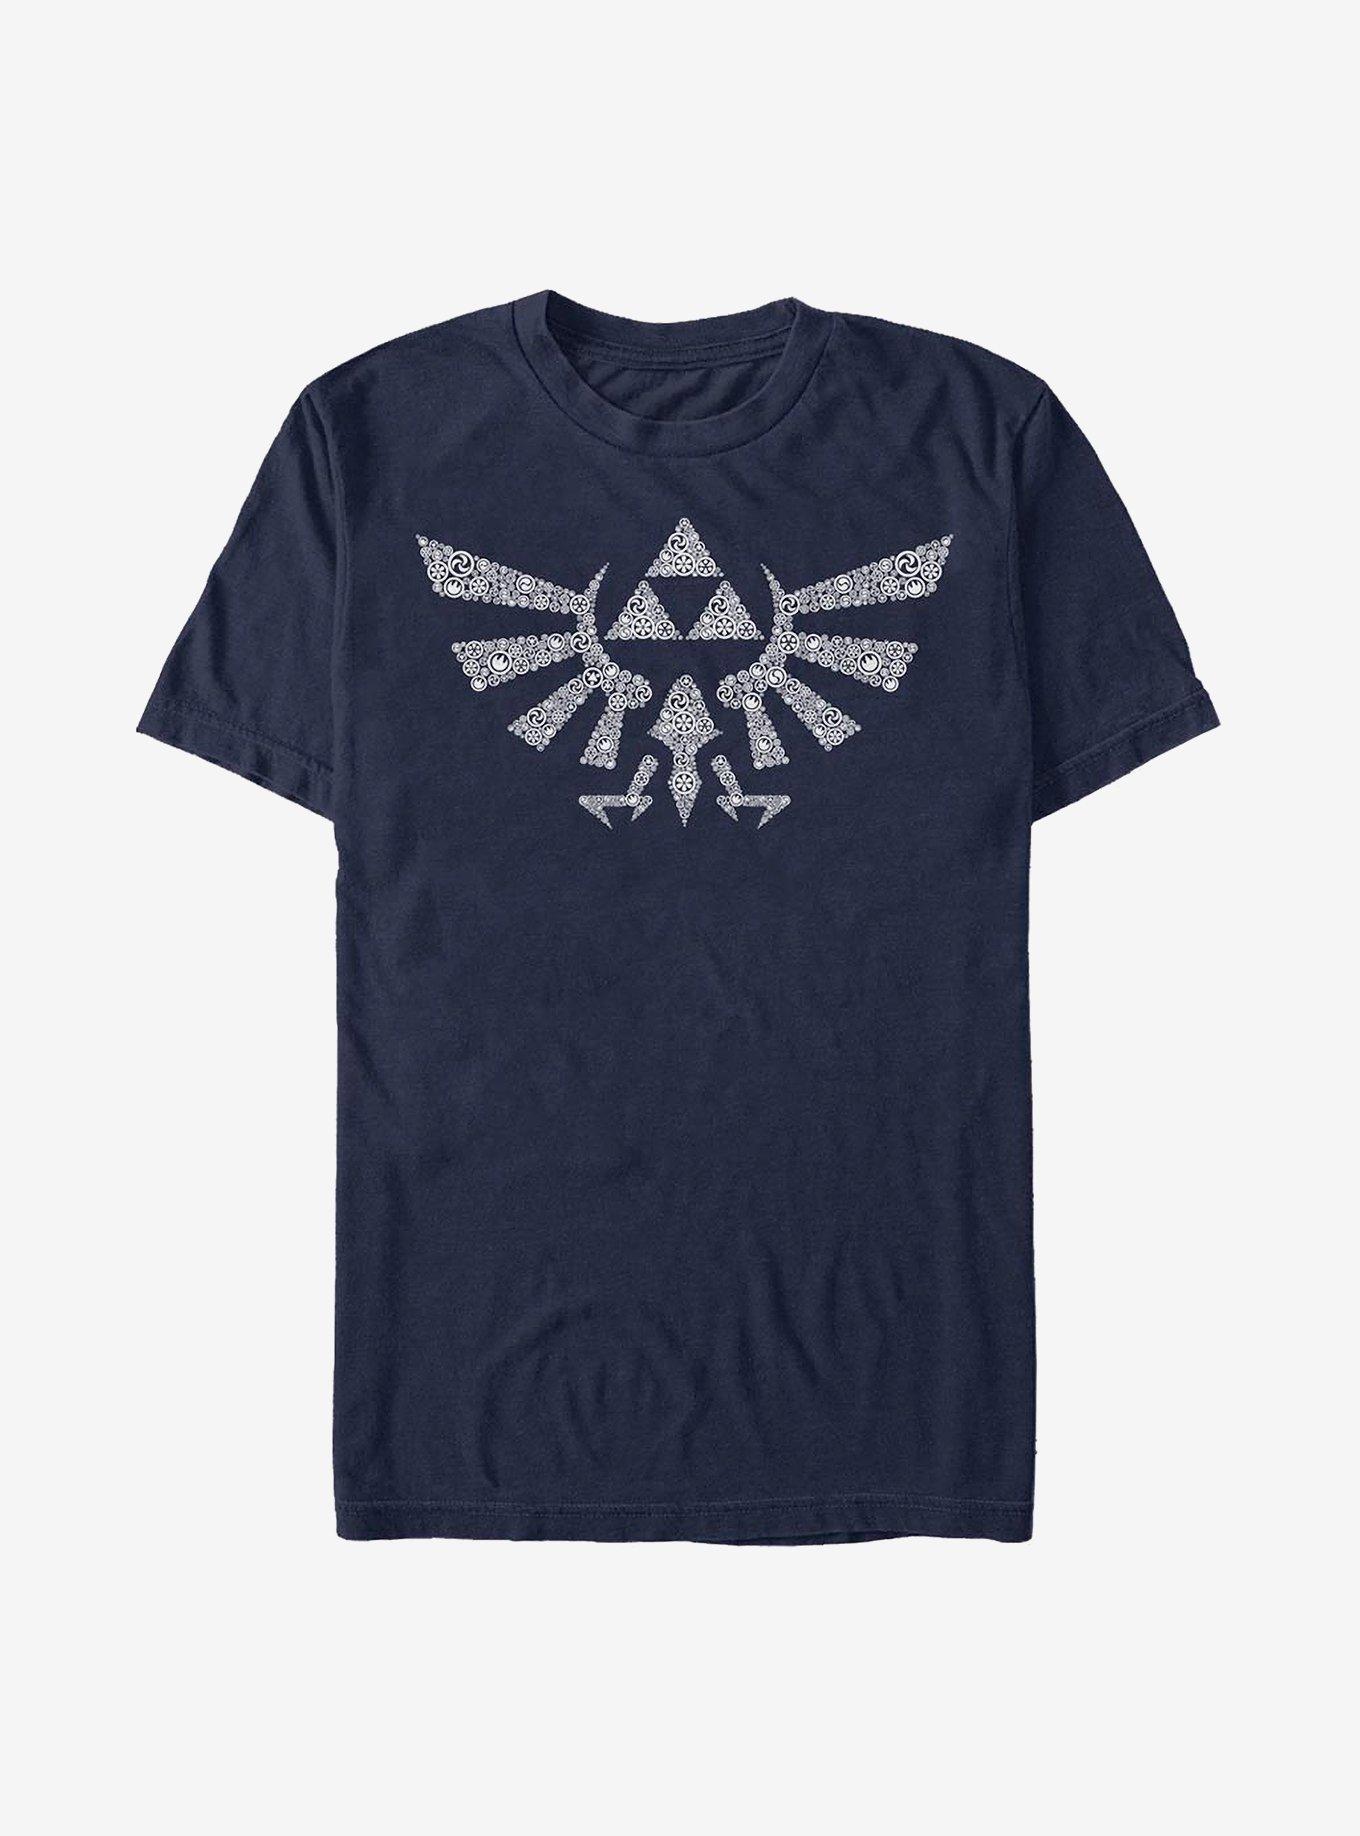 Nintendo Zelda Crest Symbol T-Shirt, NAVY, hi-res